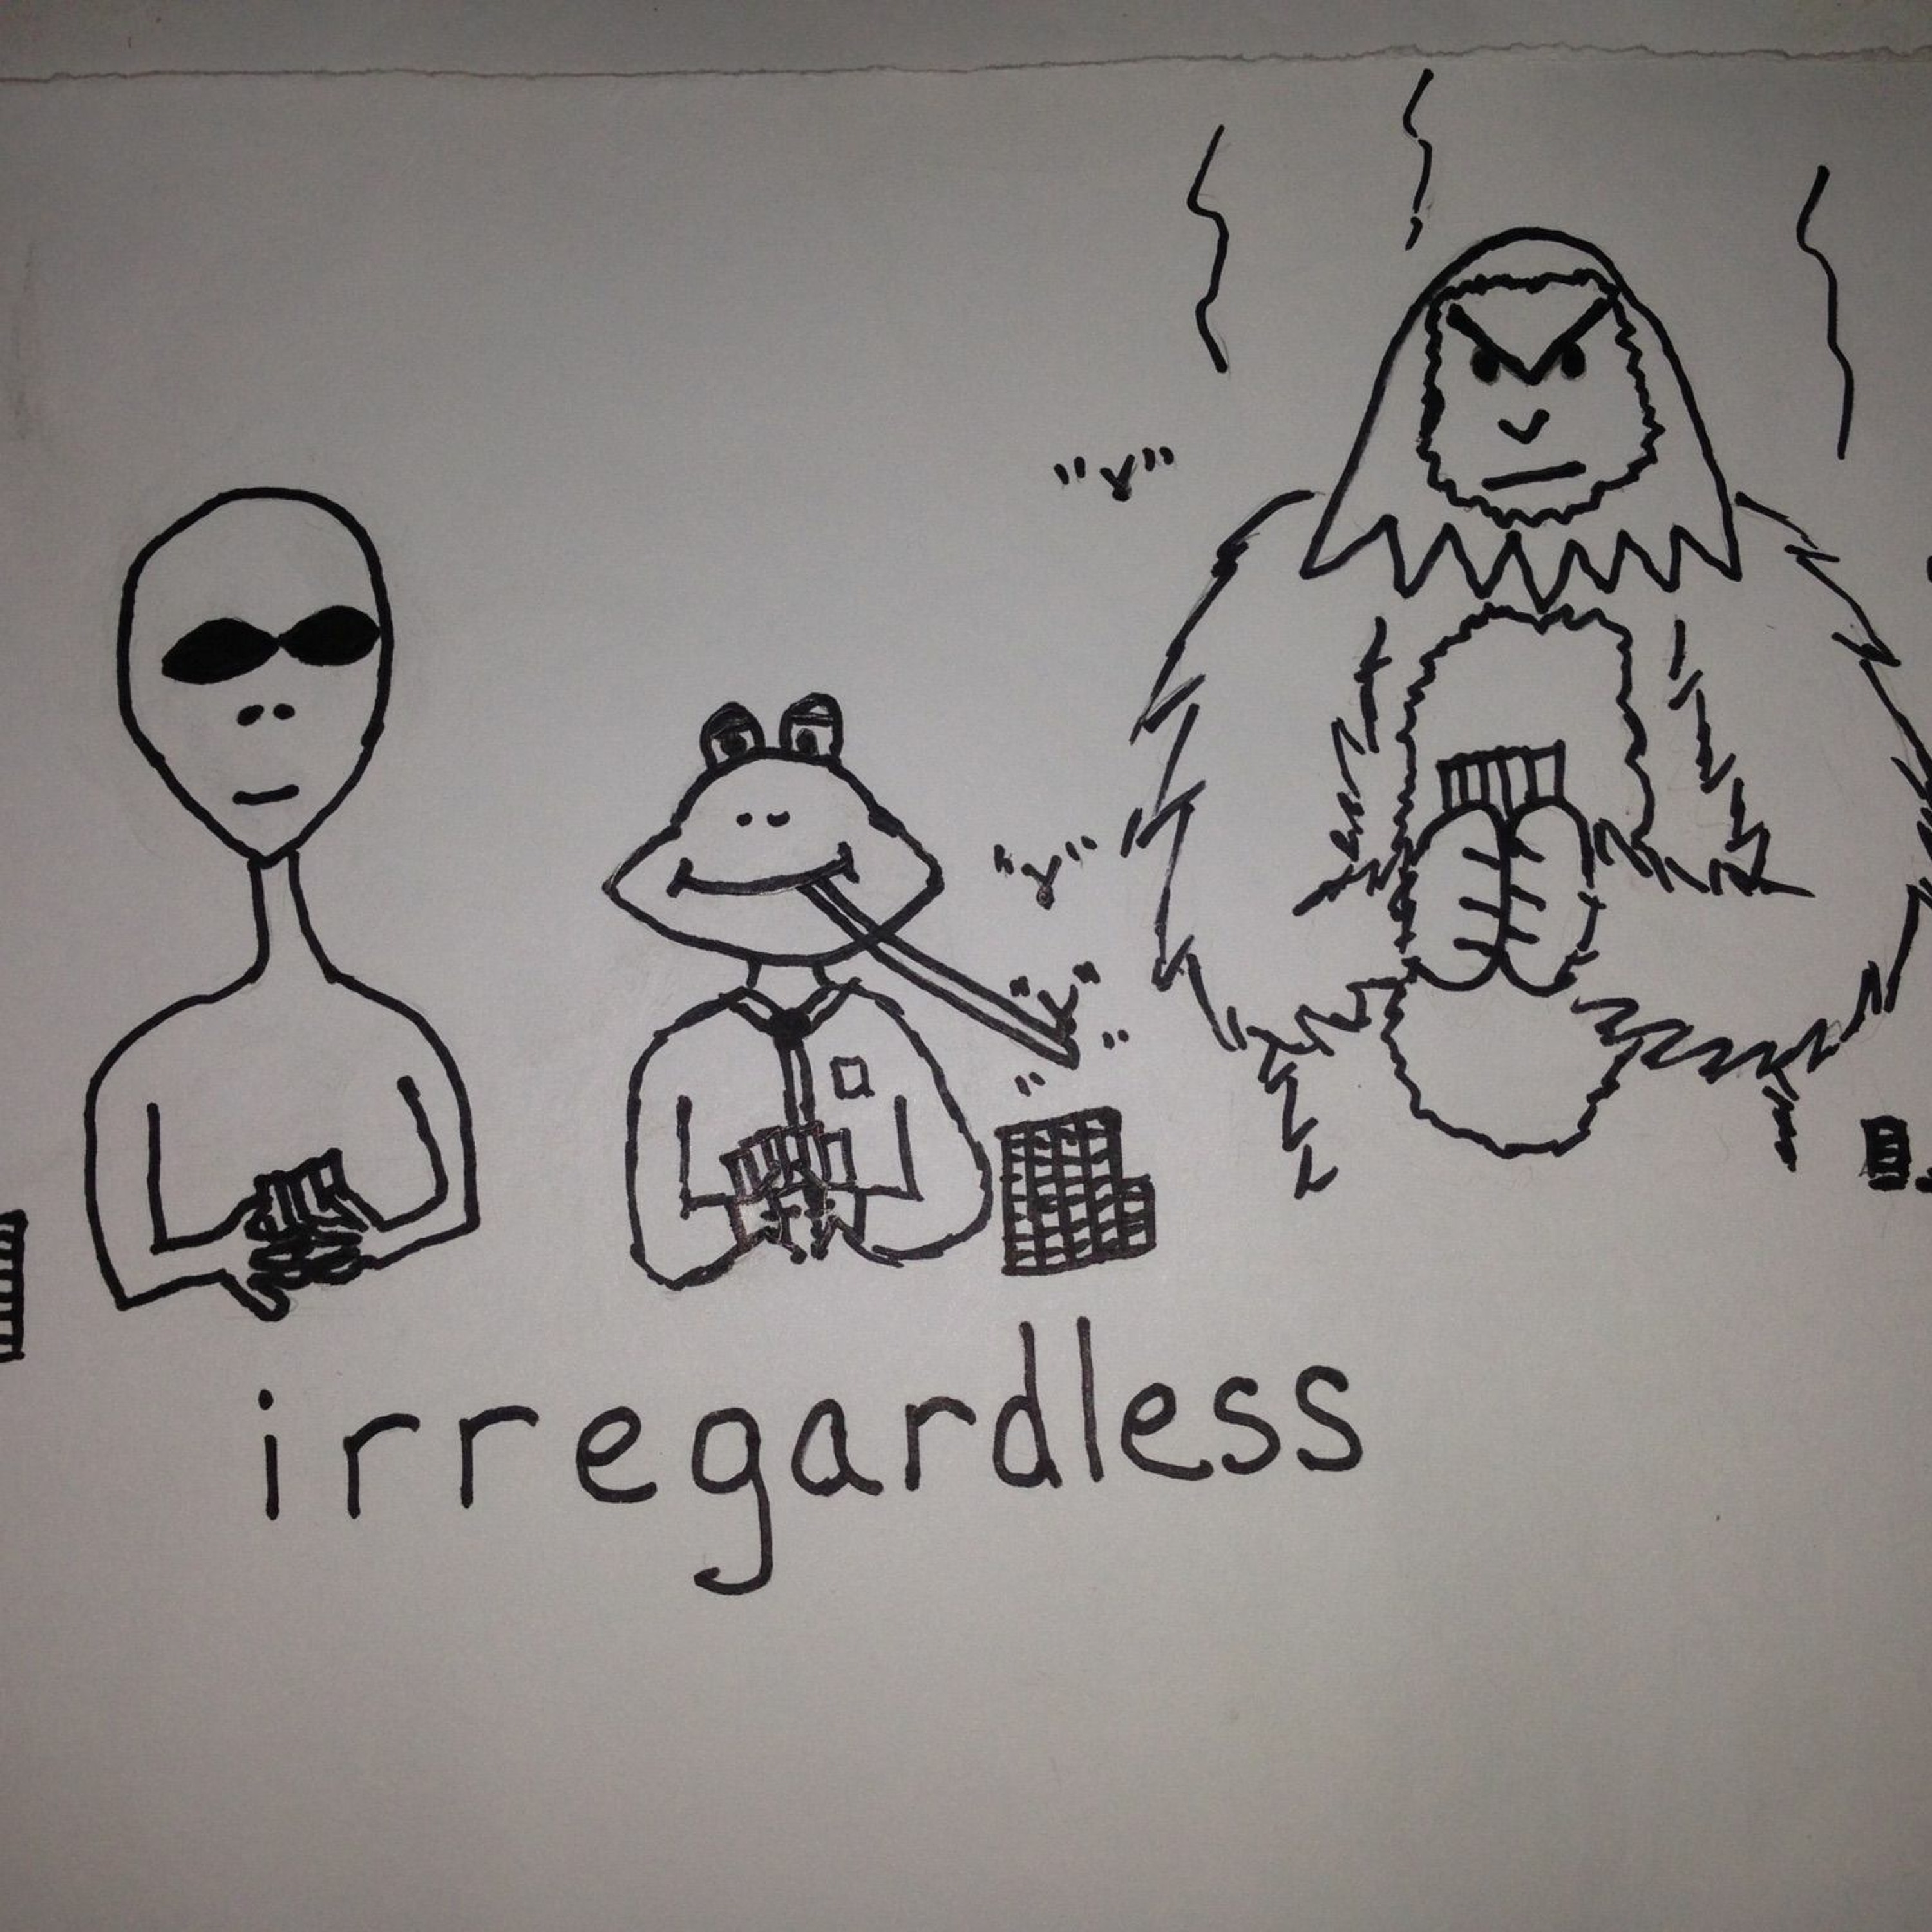 Irregardless Episode 104 - Part 1 - Grindlegob Whitecastle (H. P. Lovecraft)